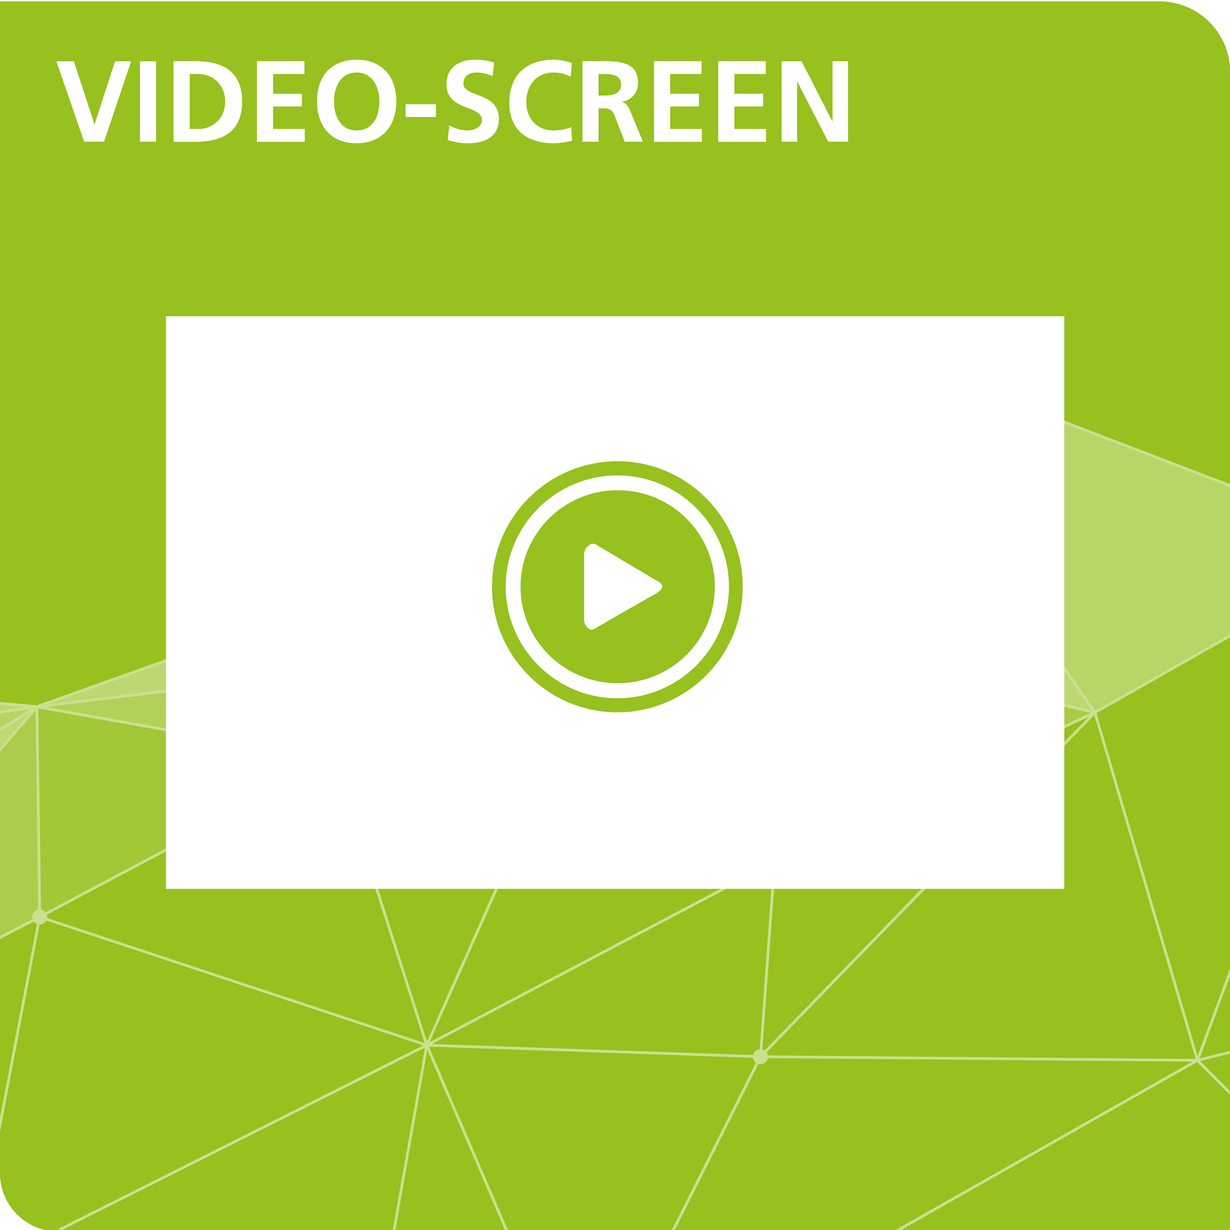 Video-Screen